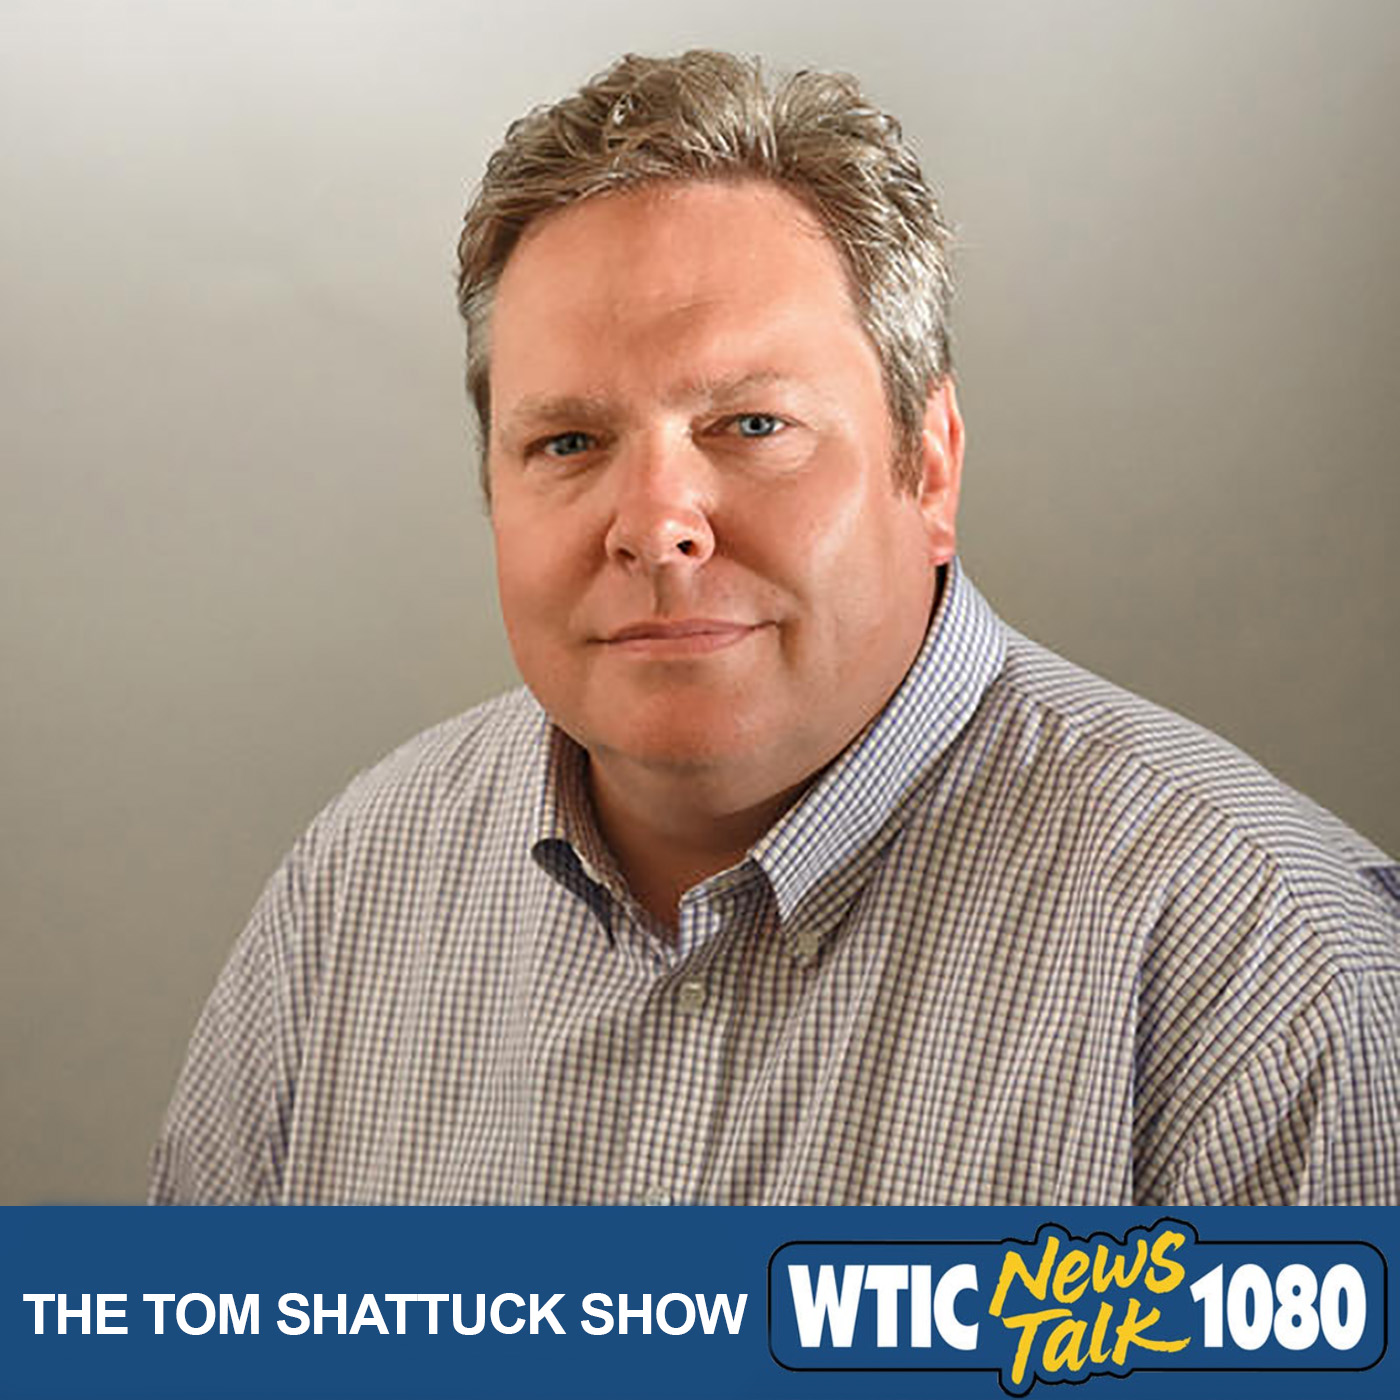 The Tom Shattuck Show